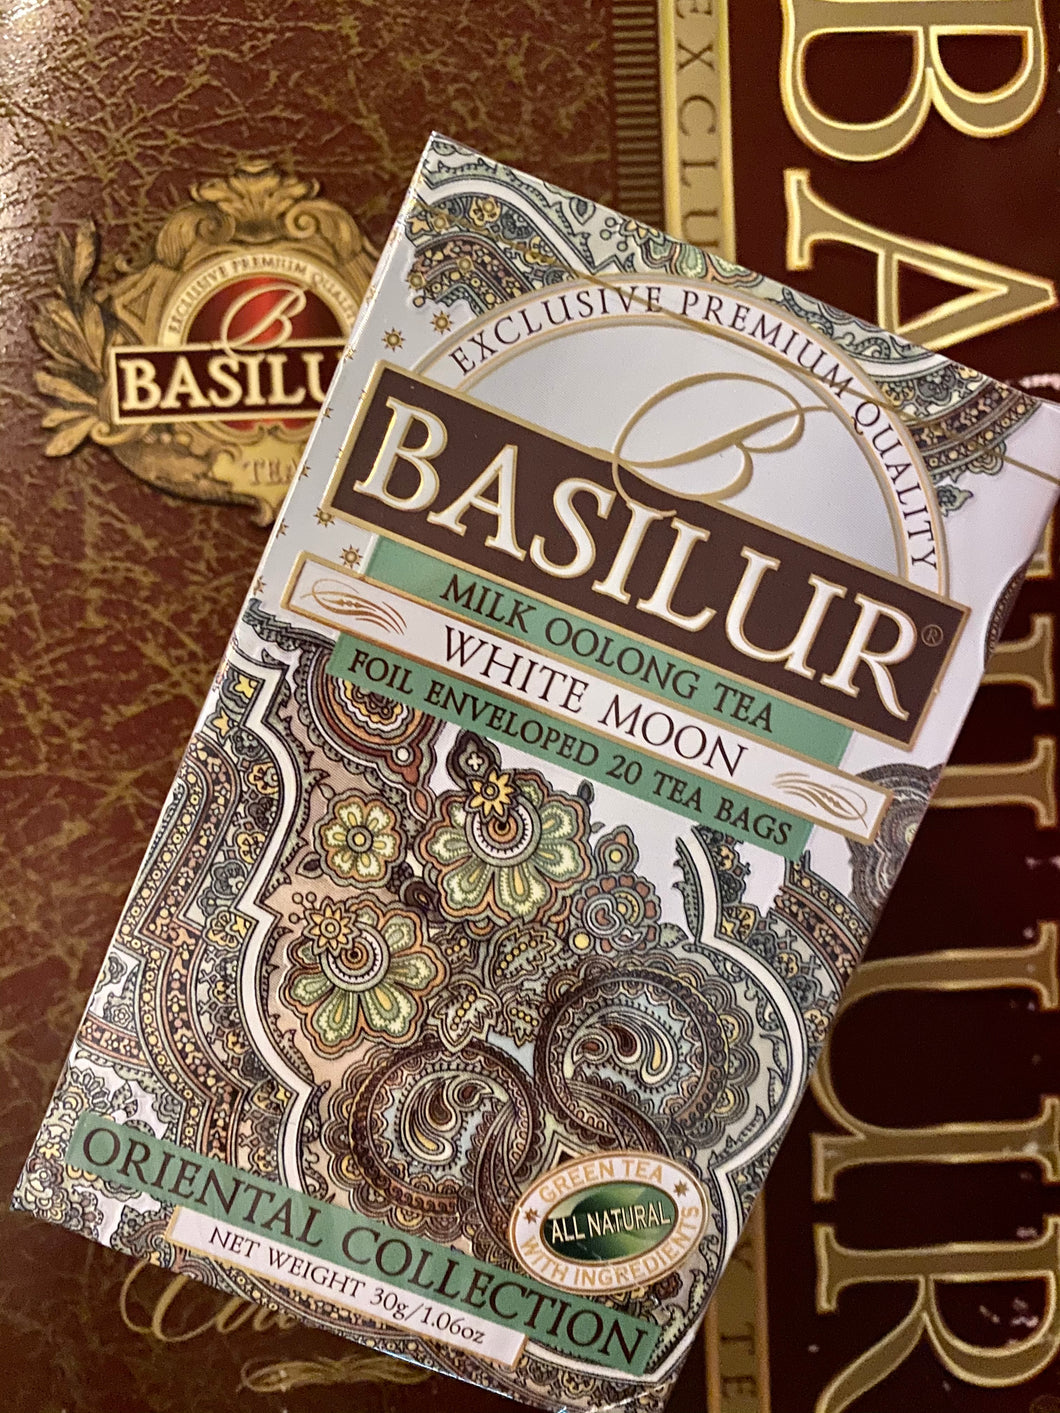 Basilur Premium oolong green tea 100g in metal caddy